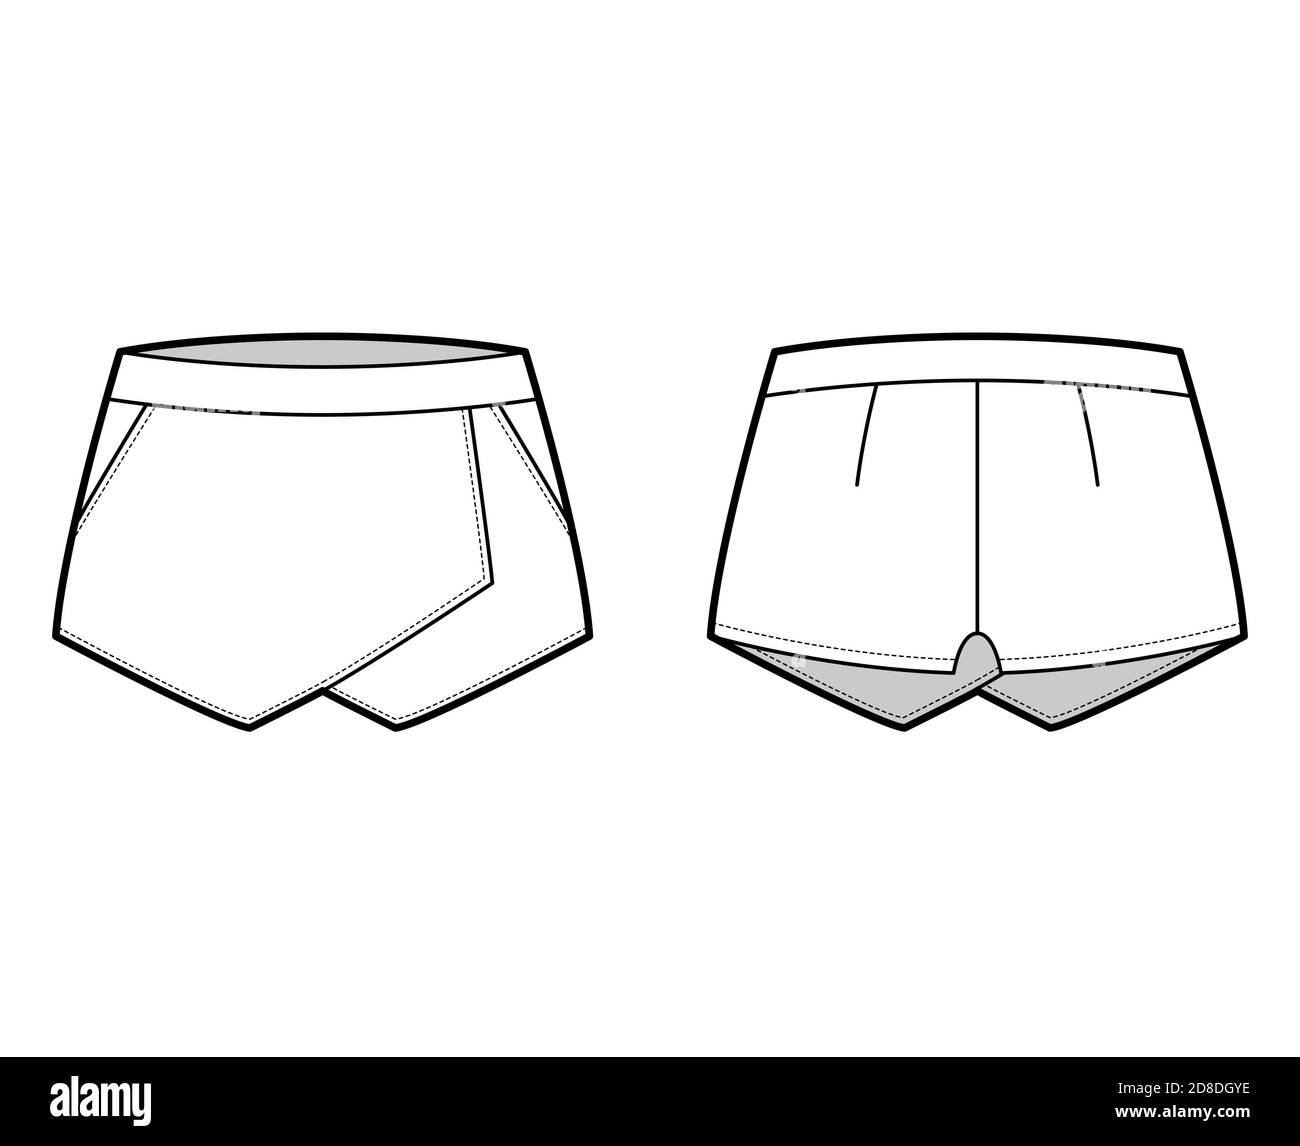 Skirt skort shorts skort technical fashion illustration with mini